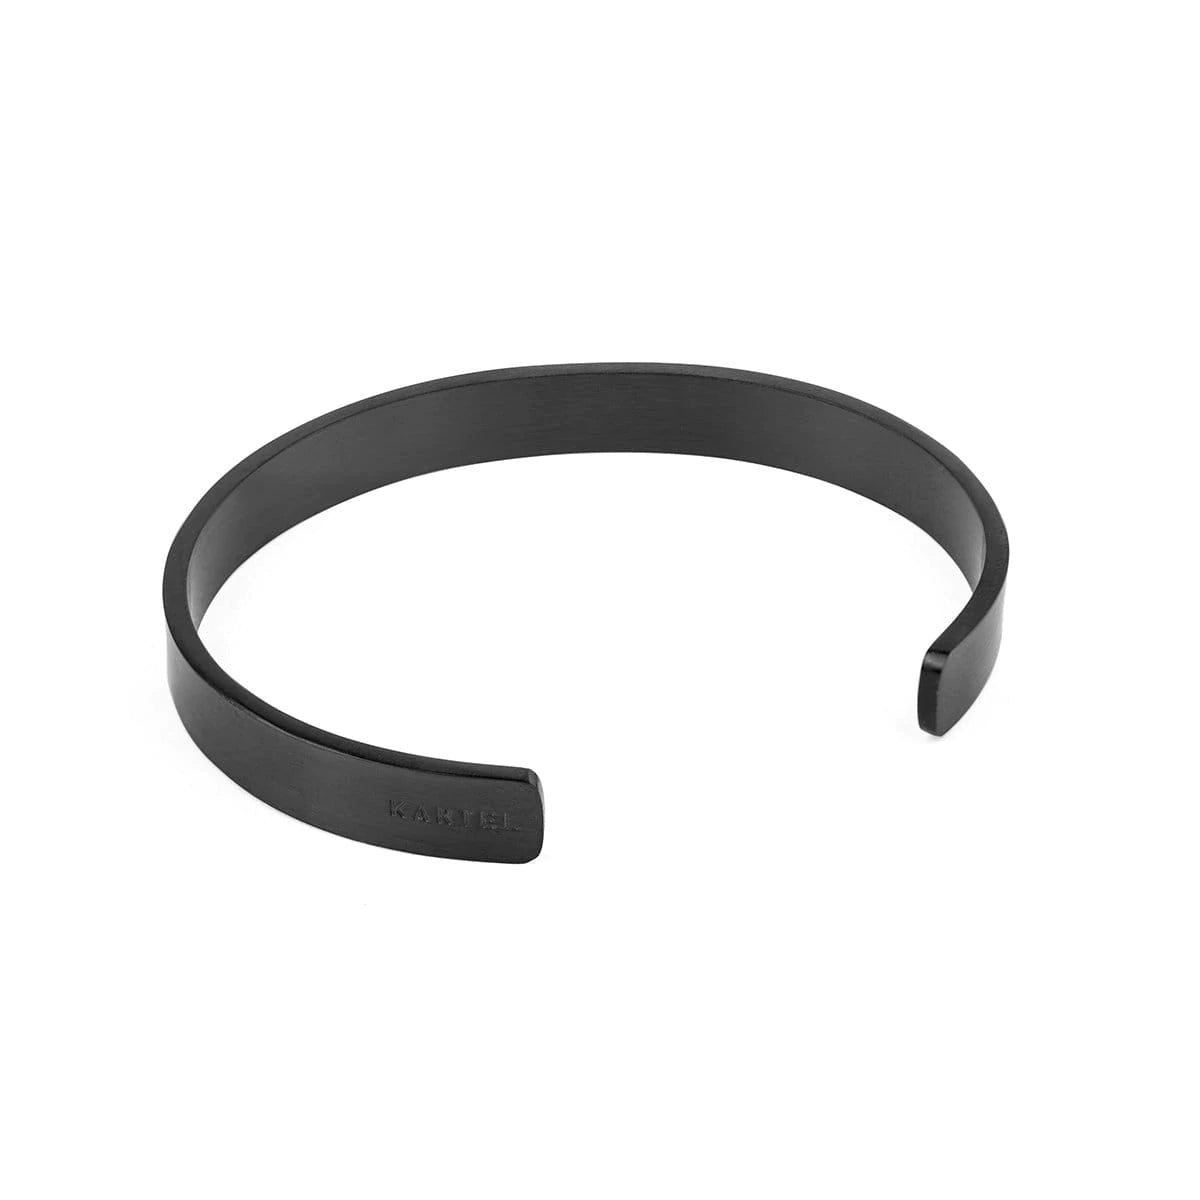 Stainless Steel (IP Black) Cuff - 4 Sizes